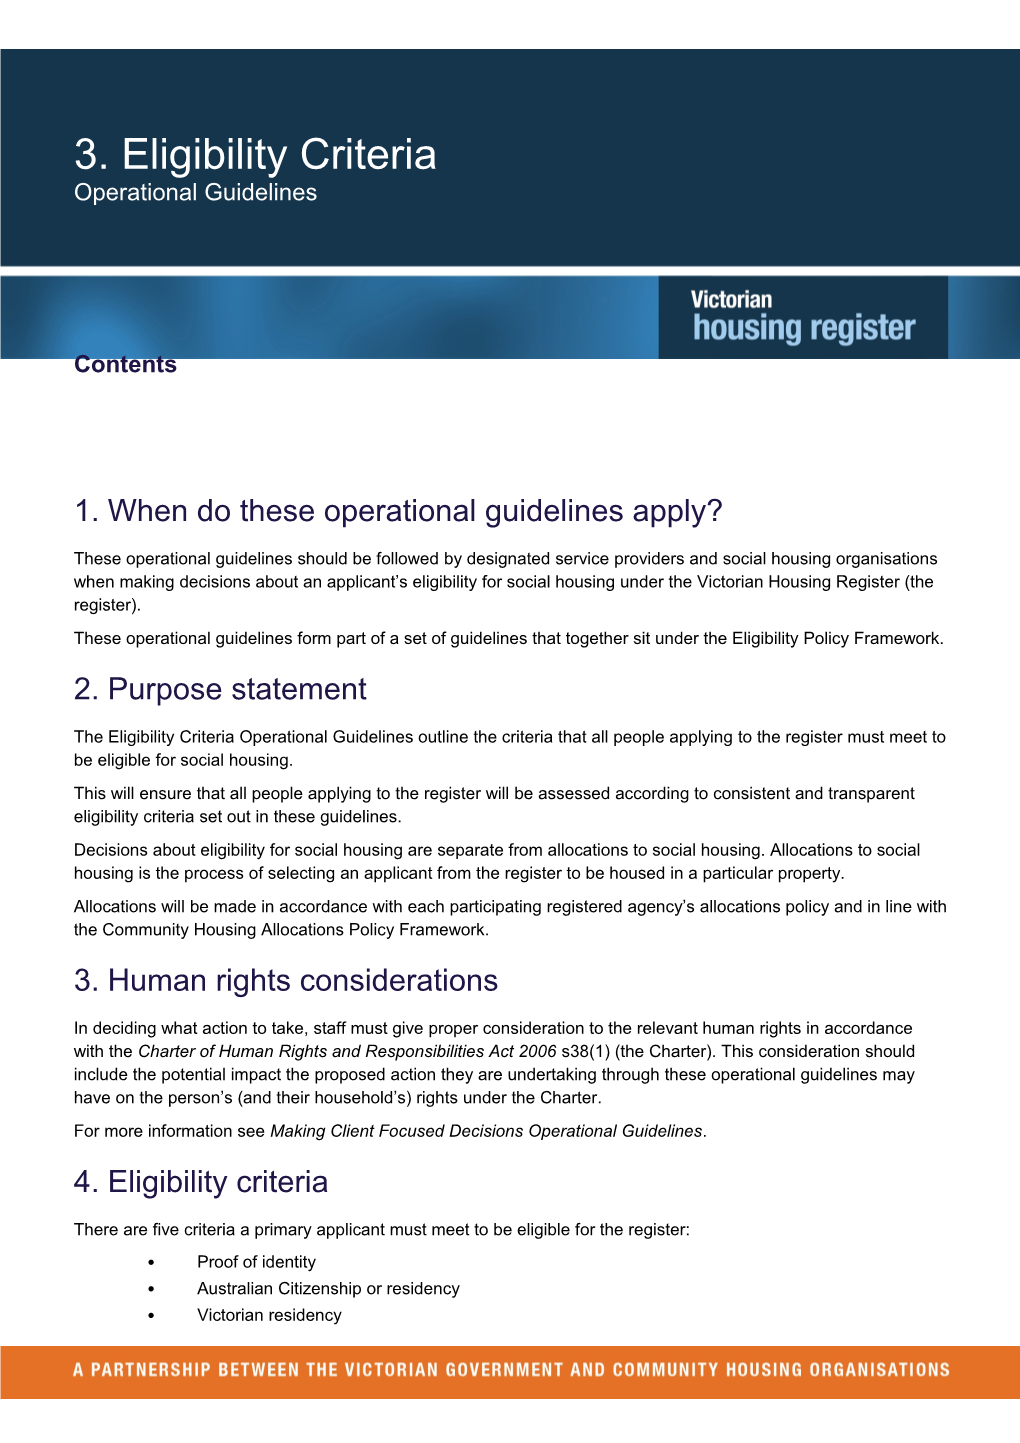 Victorian Housing Register Eligibiliy Criteria Operational Guidelines